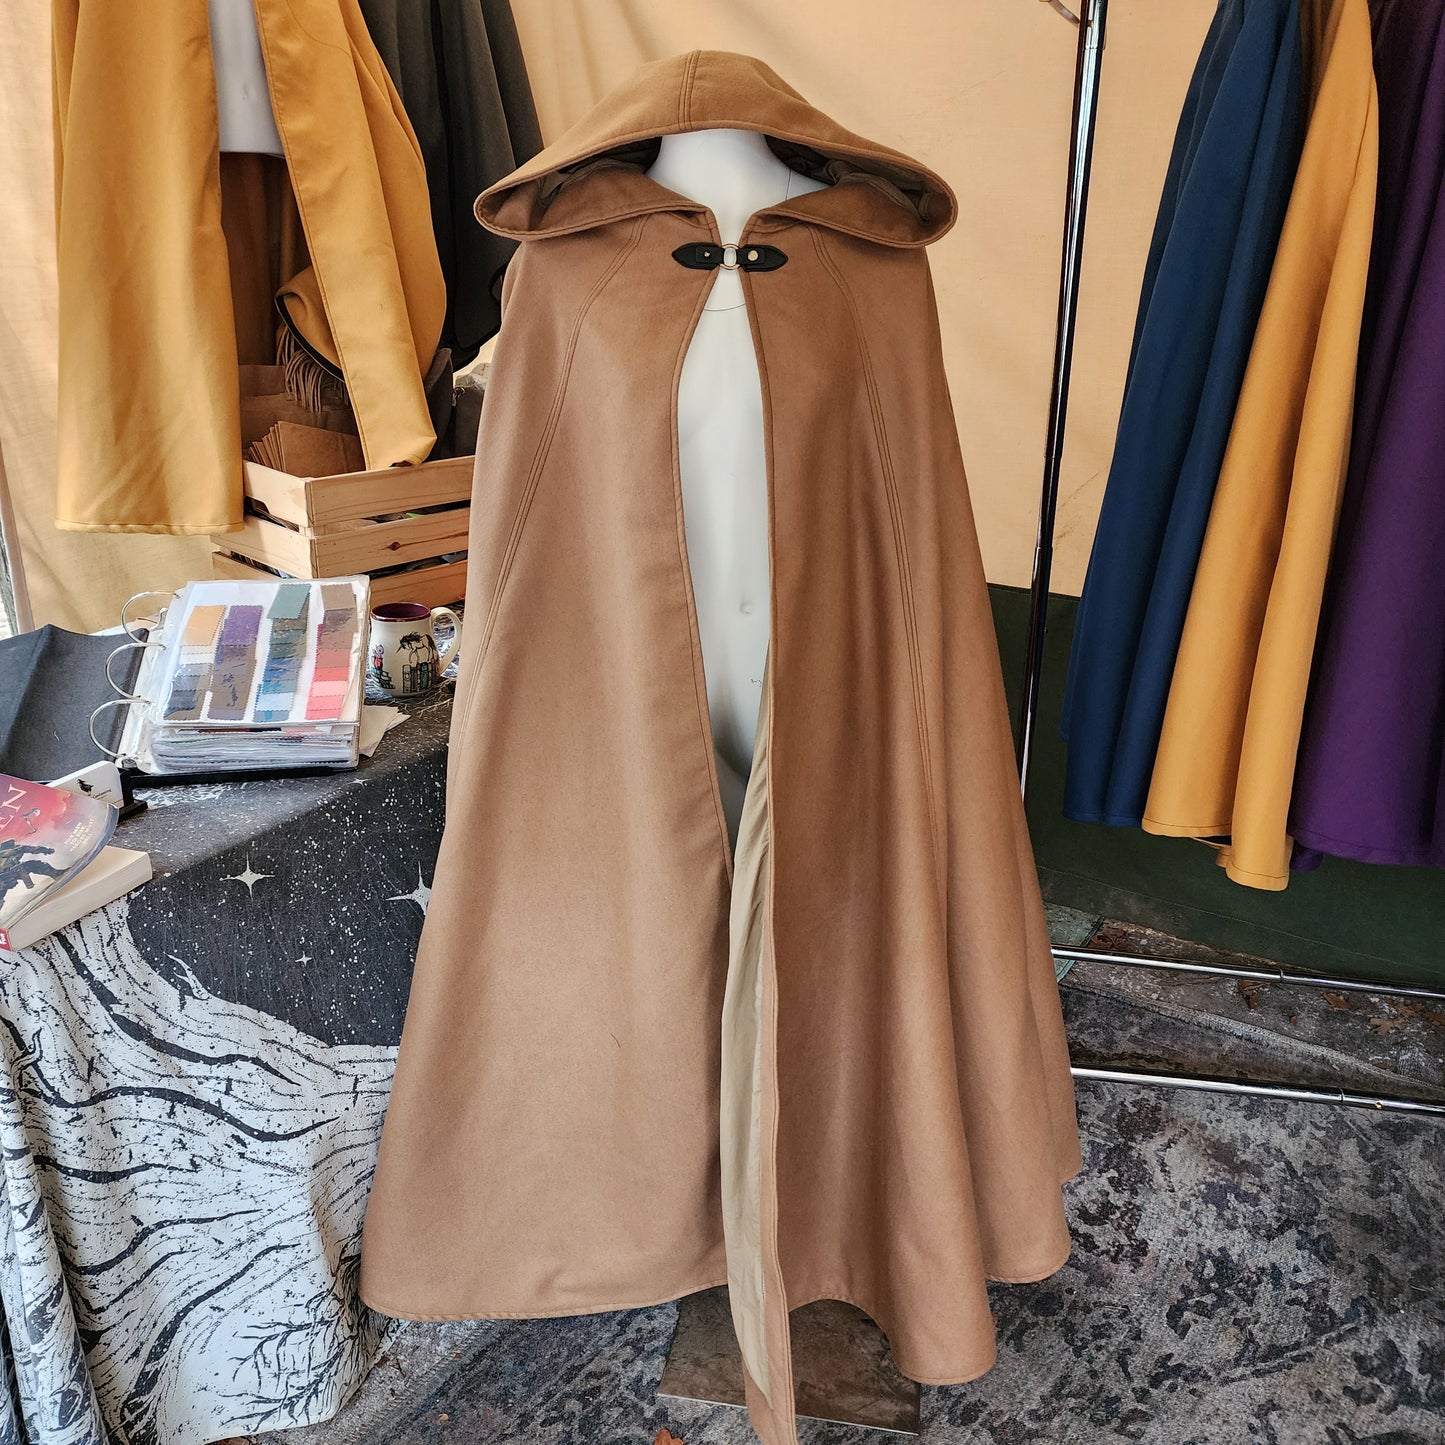 Winter Wanderer Cloak- Brown cloak with brown water resistant lining